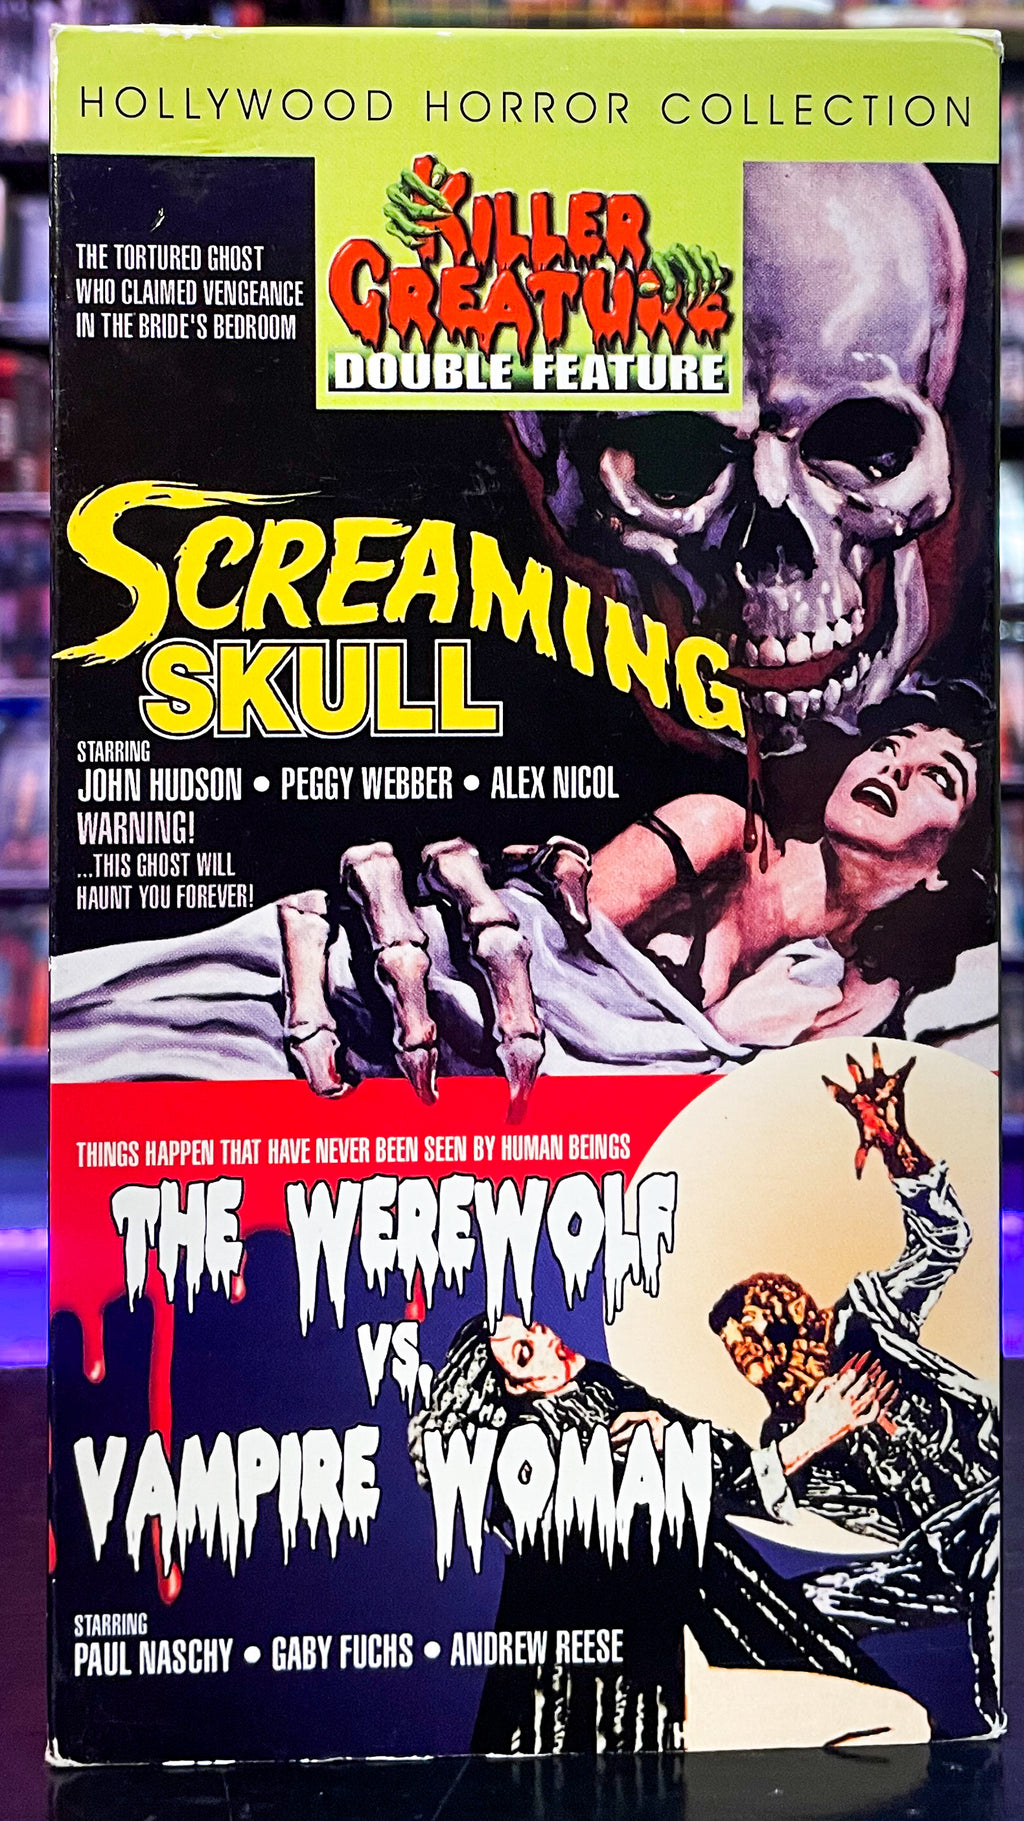 Killer Creatures Double Feature: Screaming Skull/ The Werewolf vs. Vampire Woman